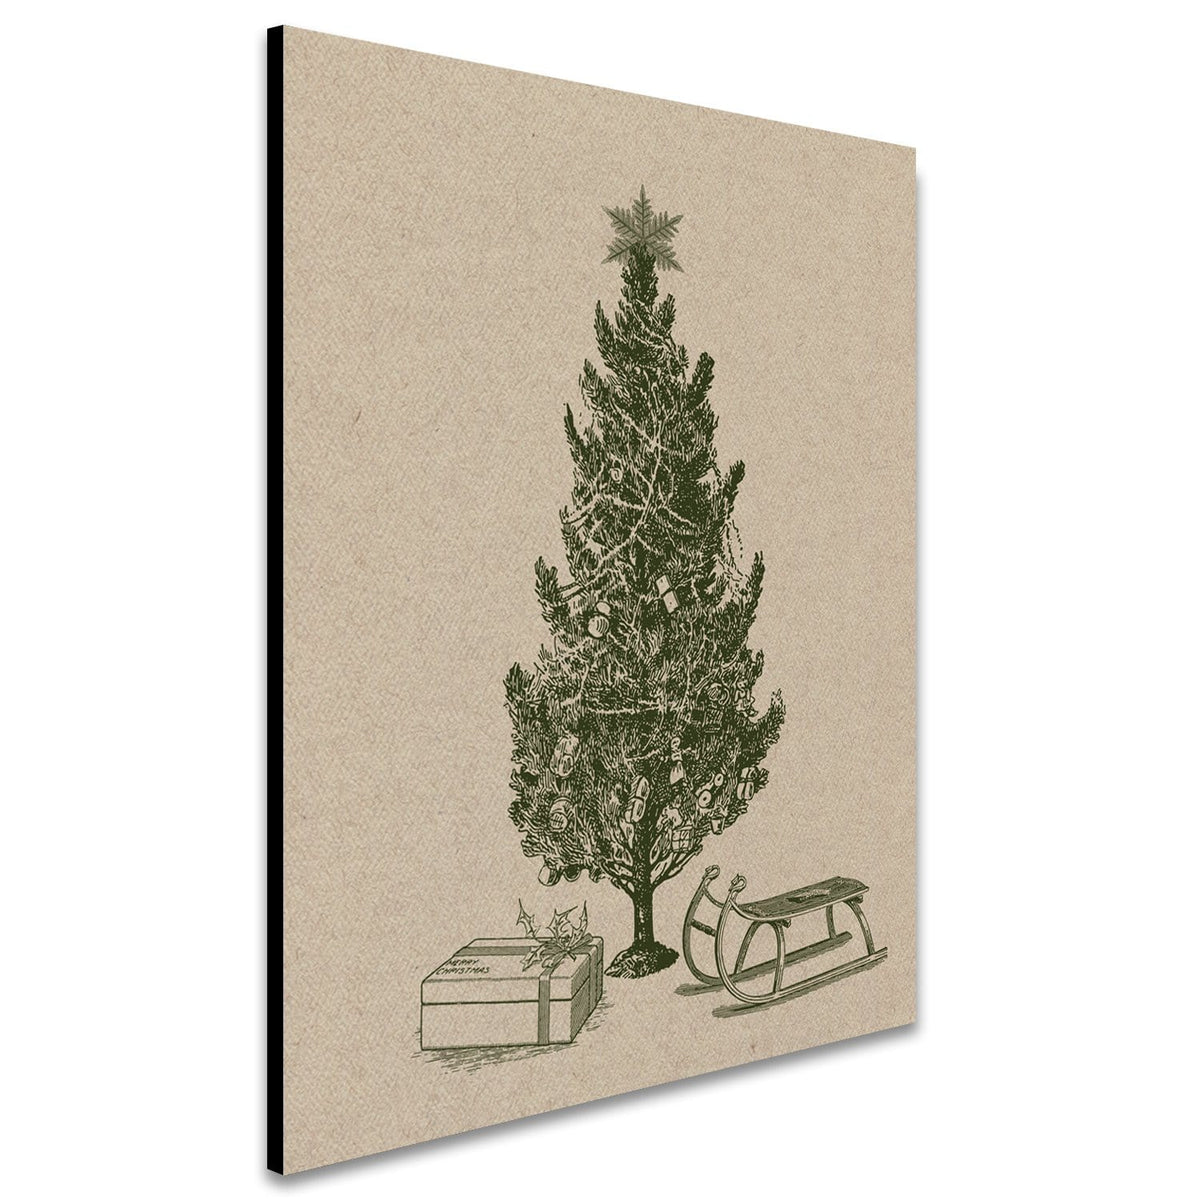 Nostalgic Christmas tree art from Personal Prints